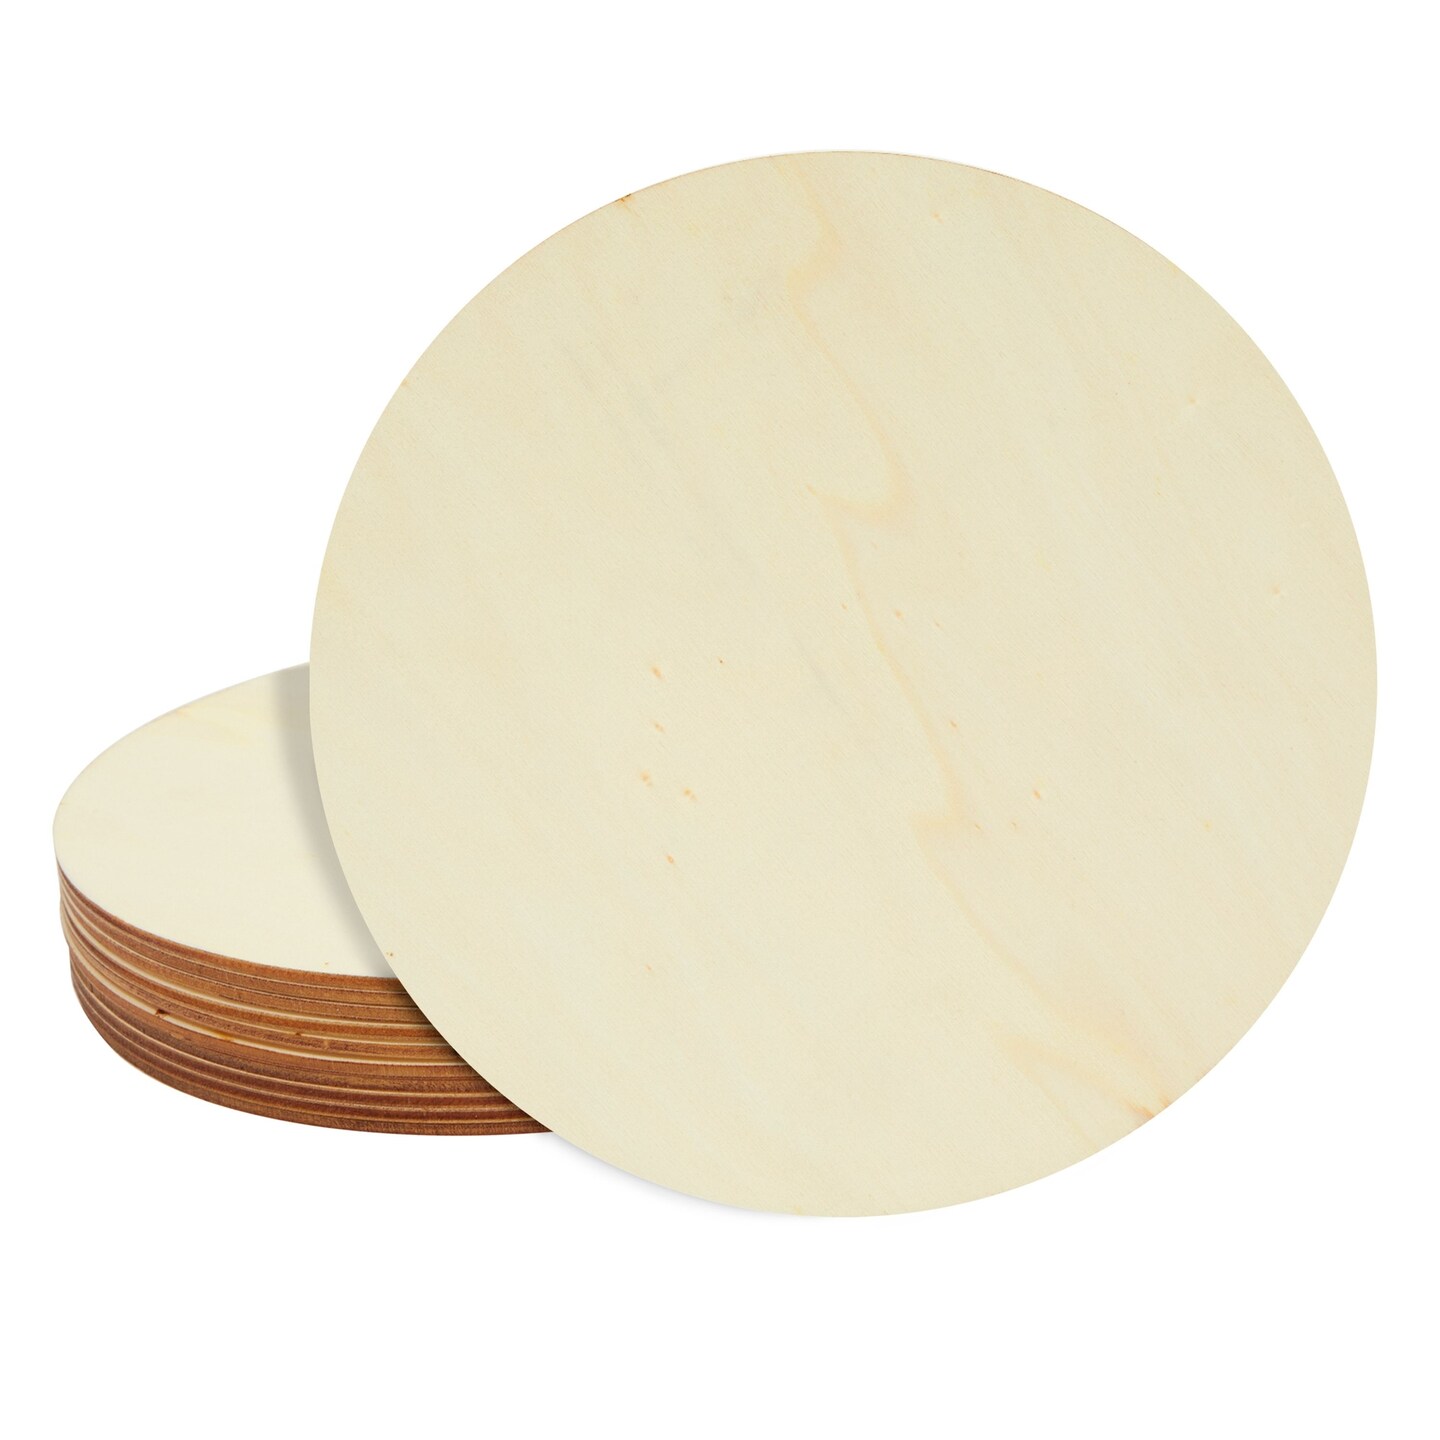 10Pcs Round Wooden Planks Blank Wood Discs Unfinished Wood Circle Wood  Embellishments Ornaments Wood Shapes Round Wood Discs for Craft Wooden  Craft